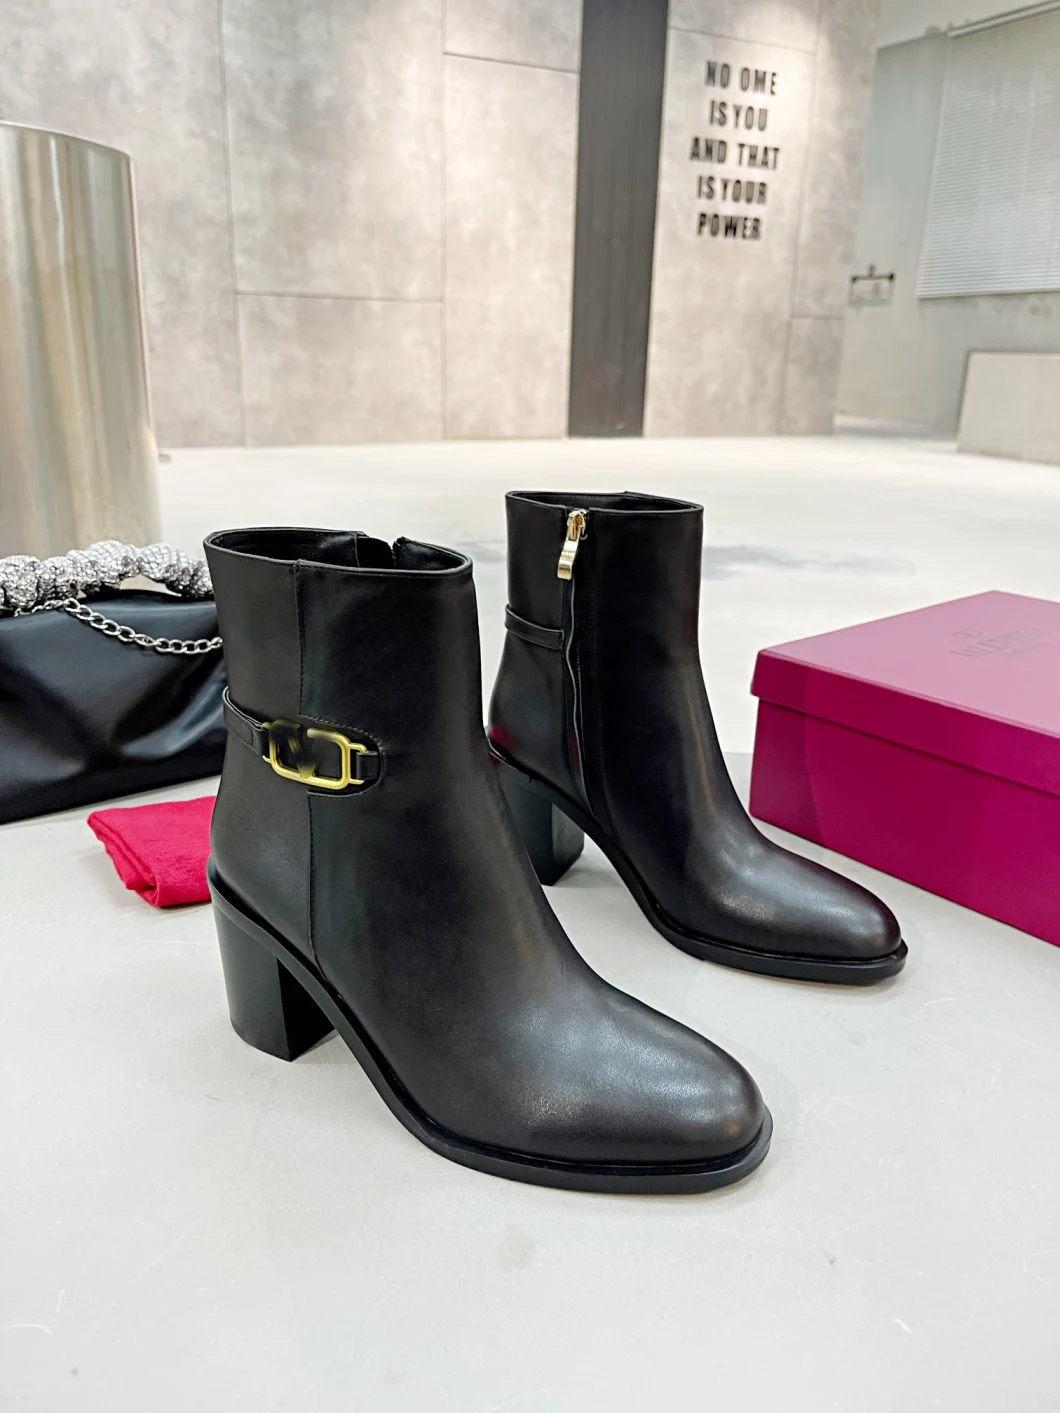 Designer Women Fashion Boots Waterproof Non-Slip Long Water Shoes Ladies Boots